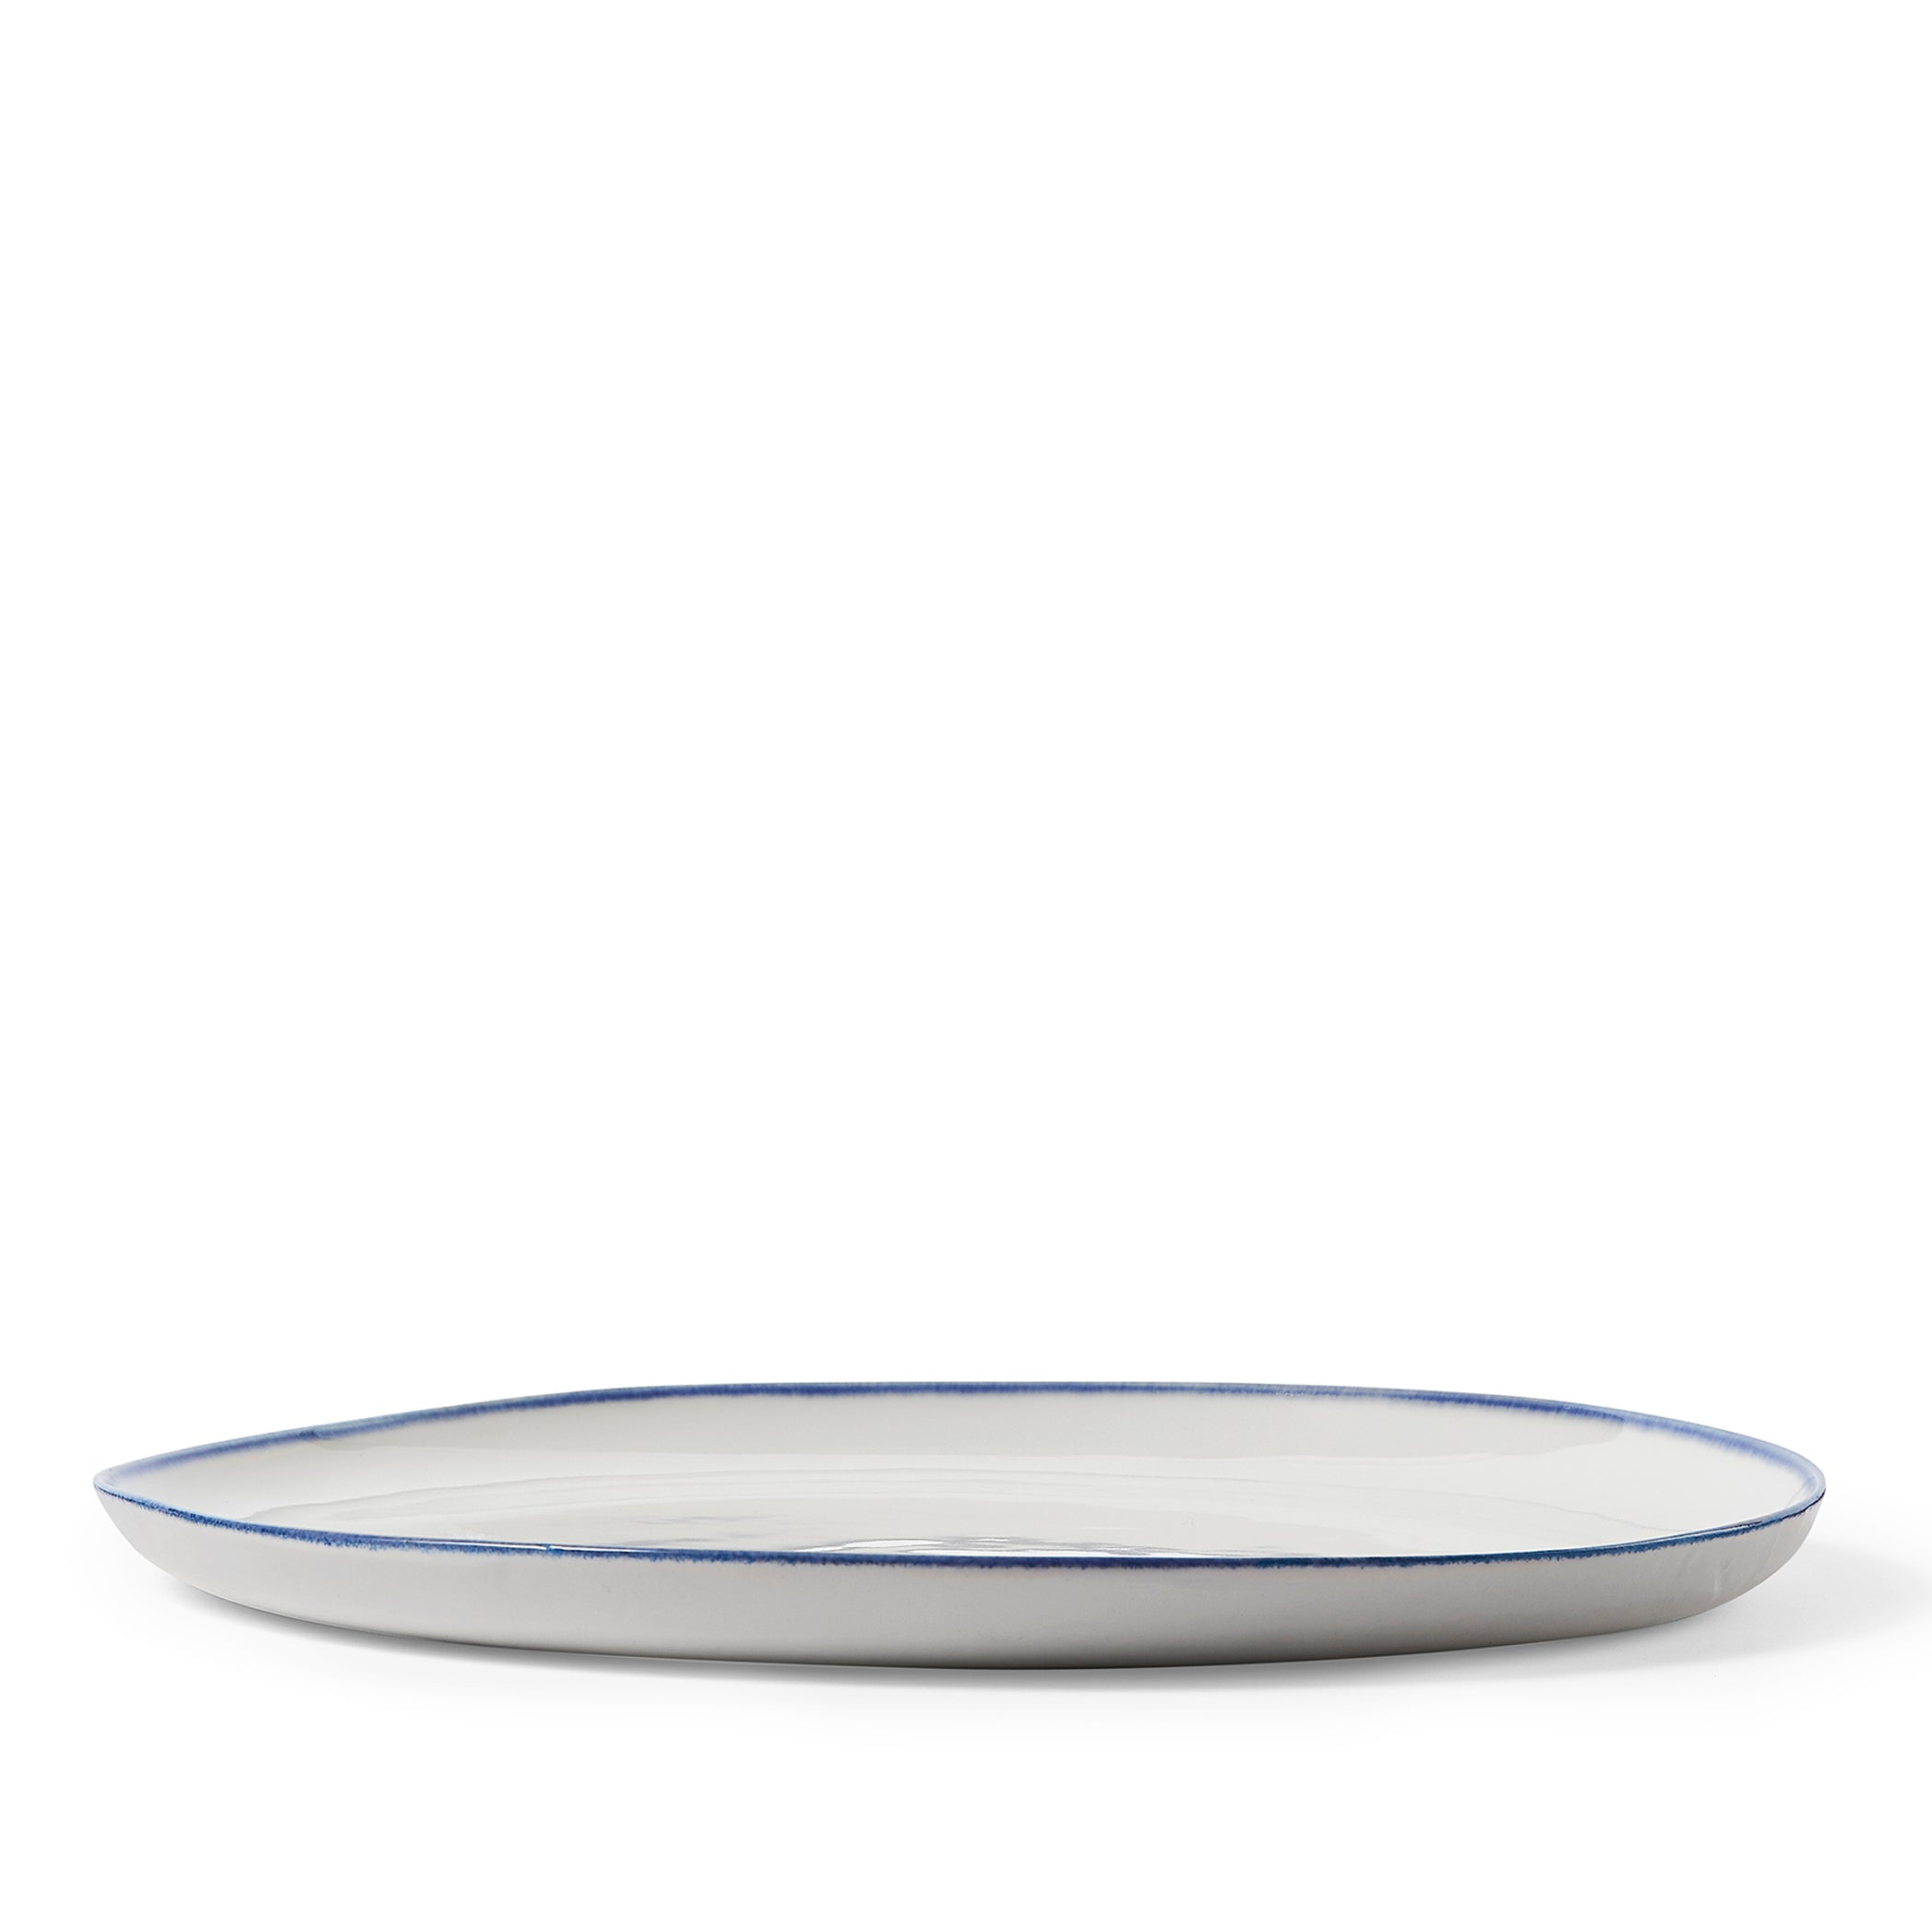 Made to order - Summerill & Bishop Handmade 31cm Porcelain Dinner Plate with Midnight Blue Rim